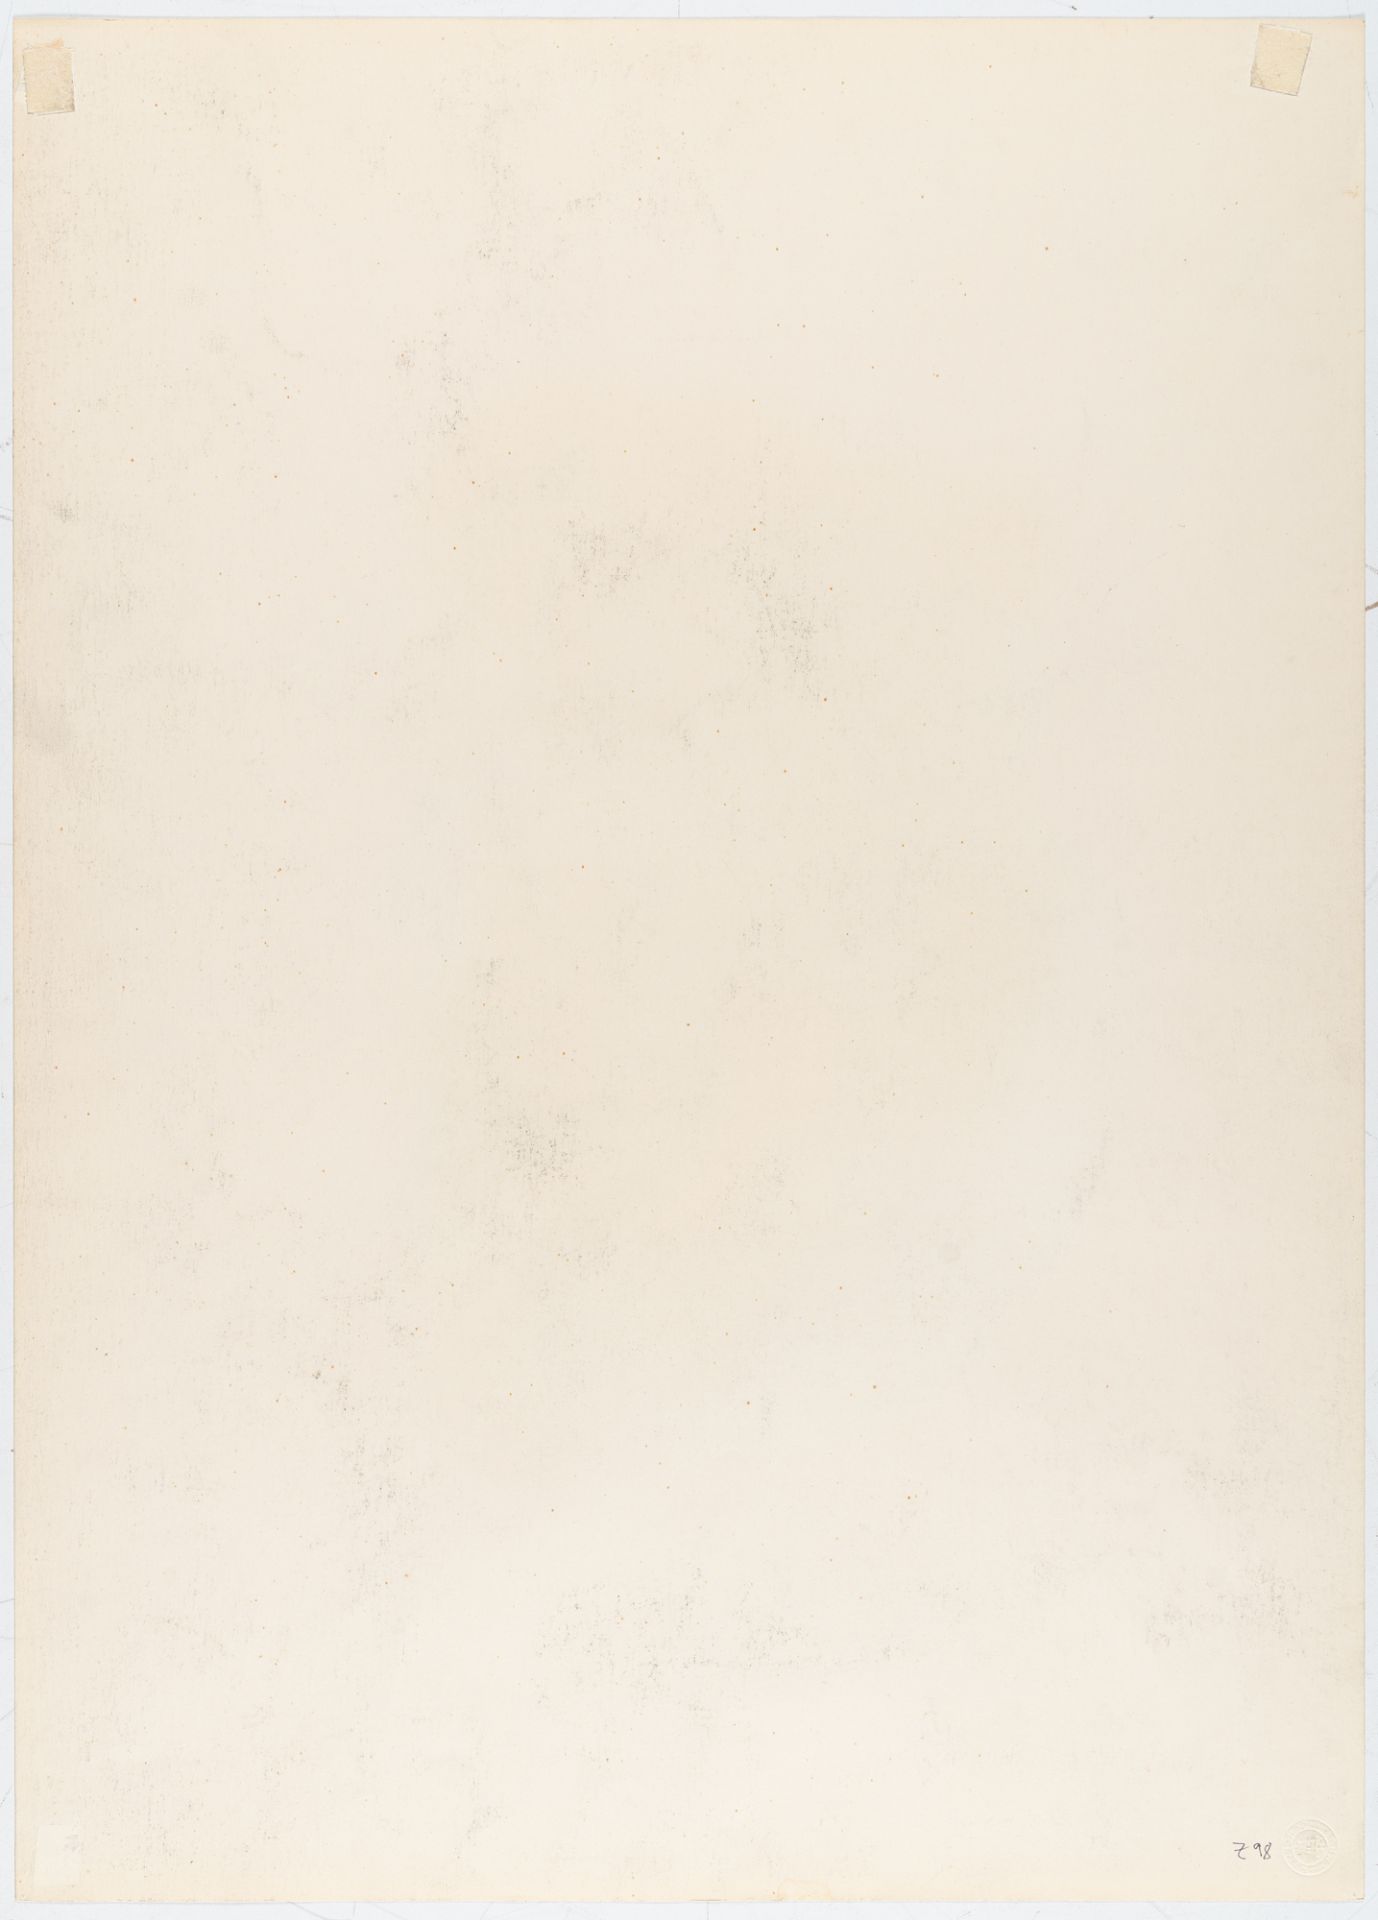 Richard Oelze, Drawing.Pencil on fine wove cardboard by Schoeller Turm. (1954). Ca. 63 x 45 cm. - Image 3 of 3